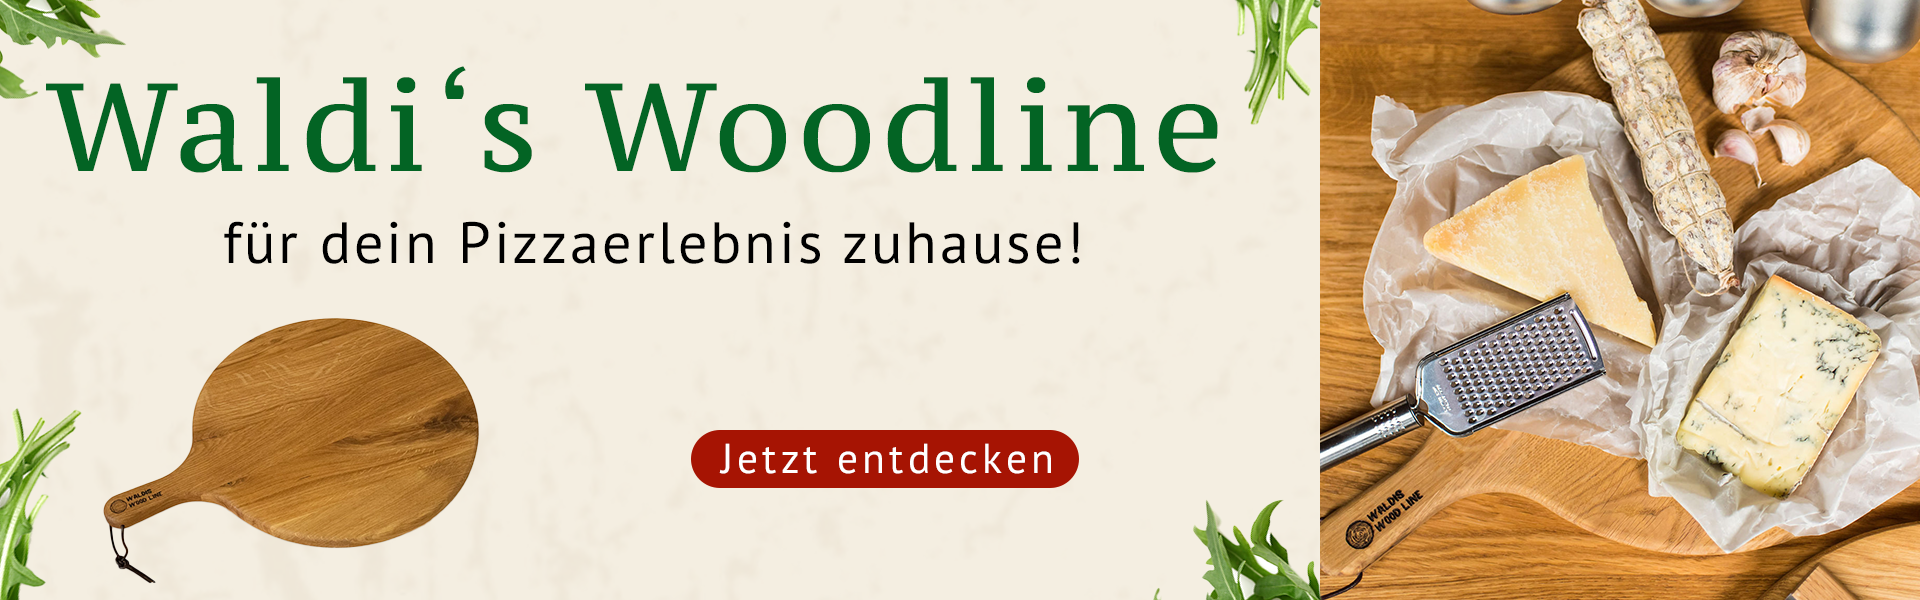 Waldis Woodline